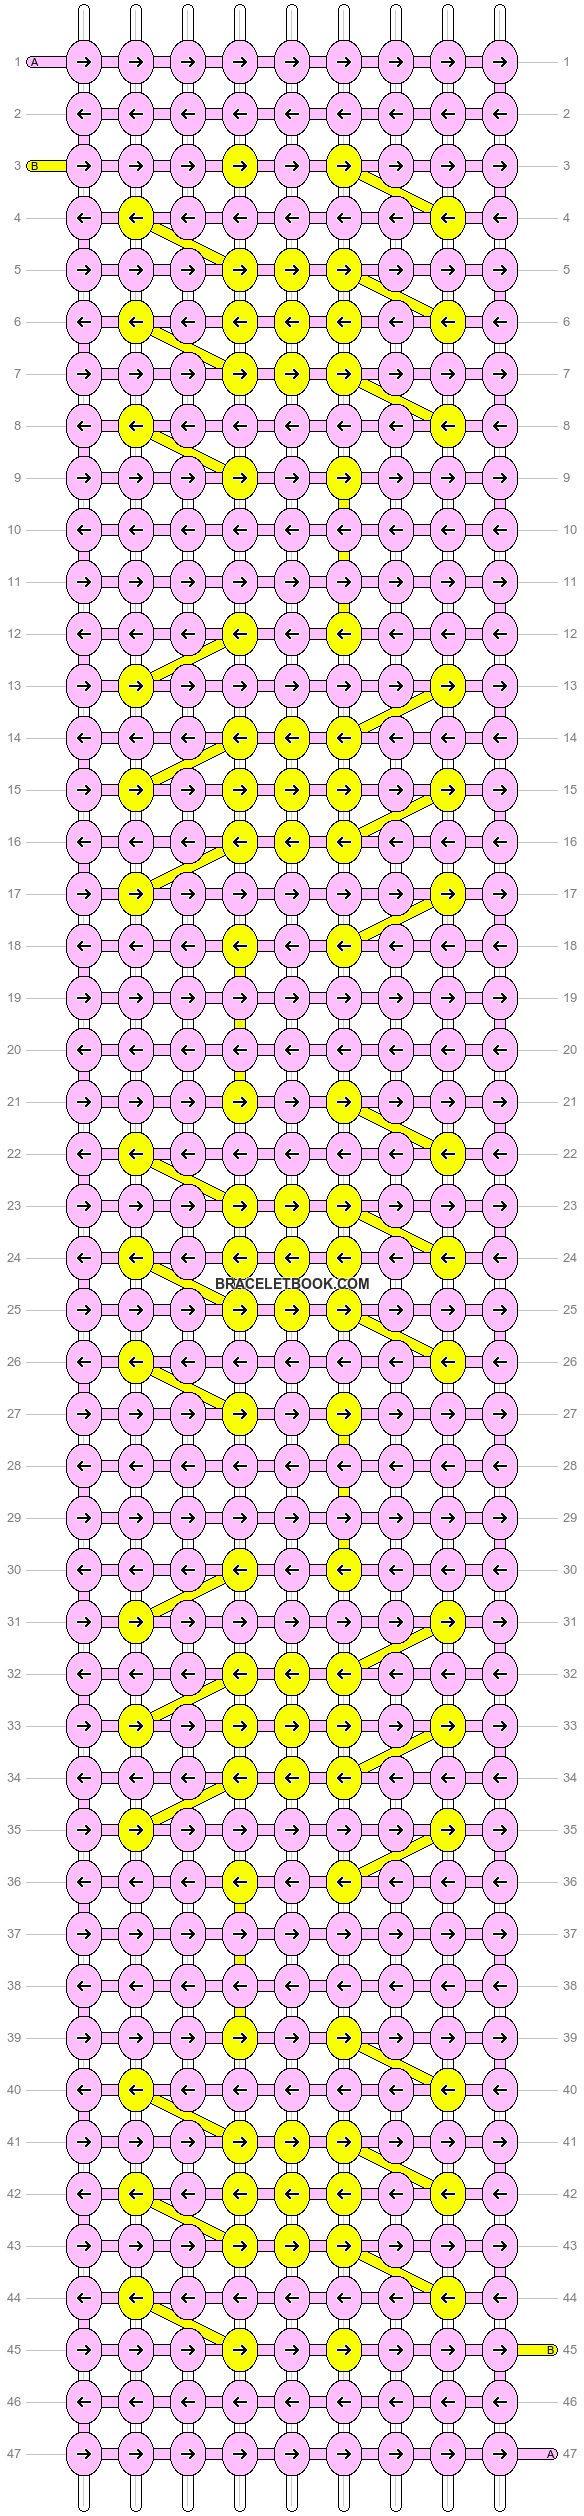 Alpha pattern #55816 variation #97020 pattern